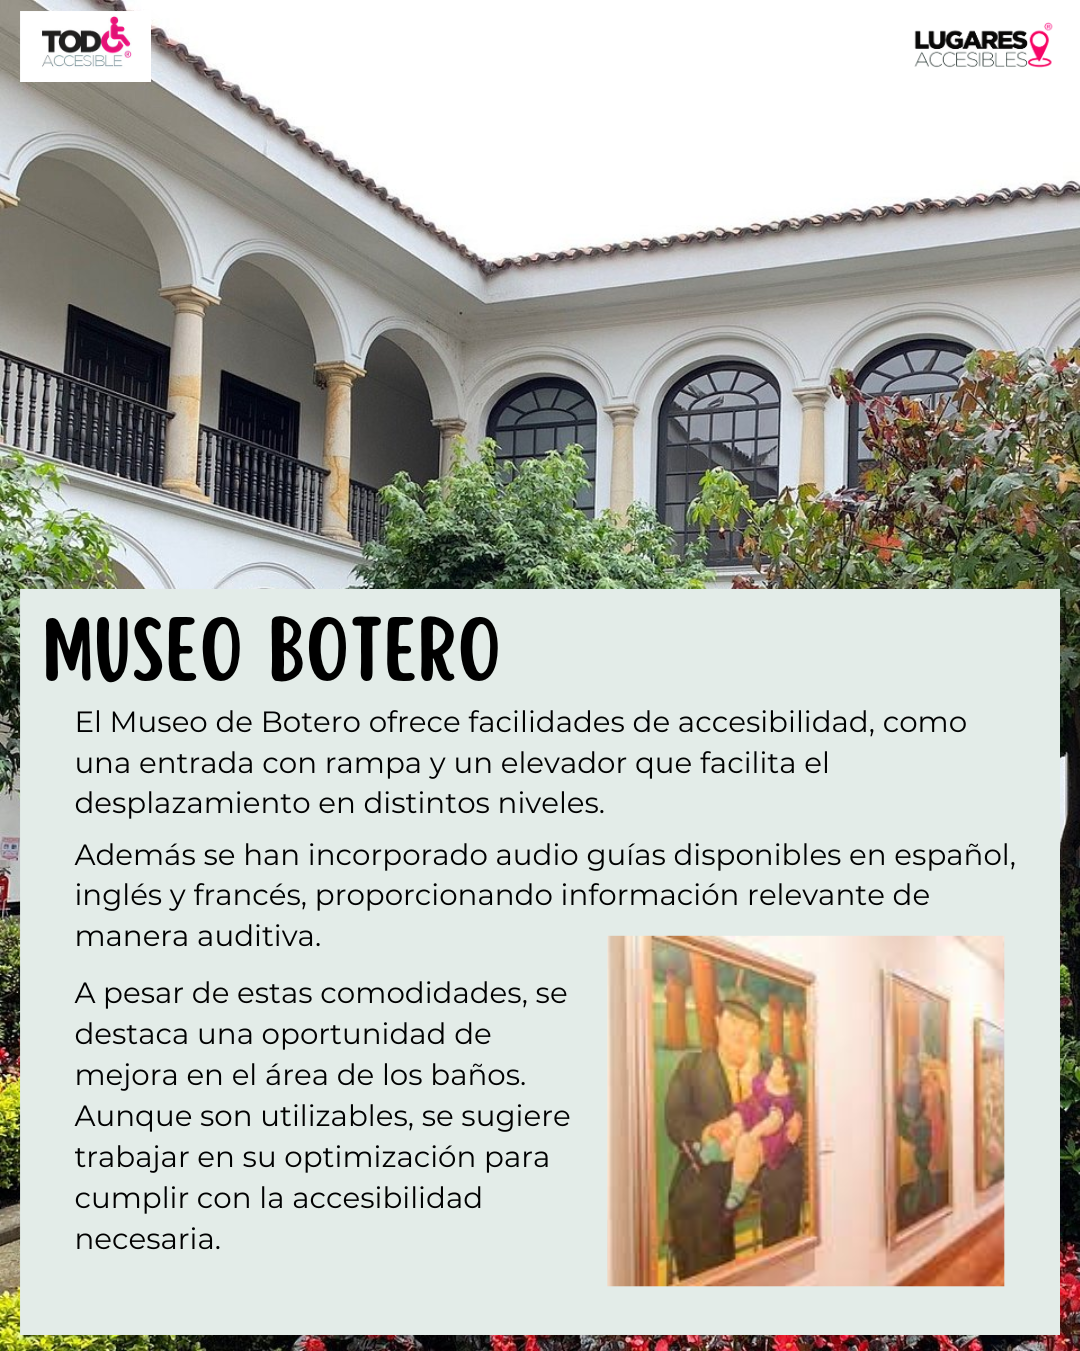 Imagen de Museo Botero